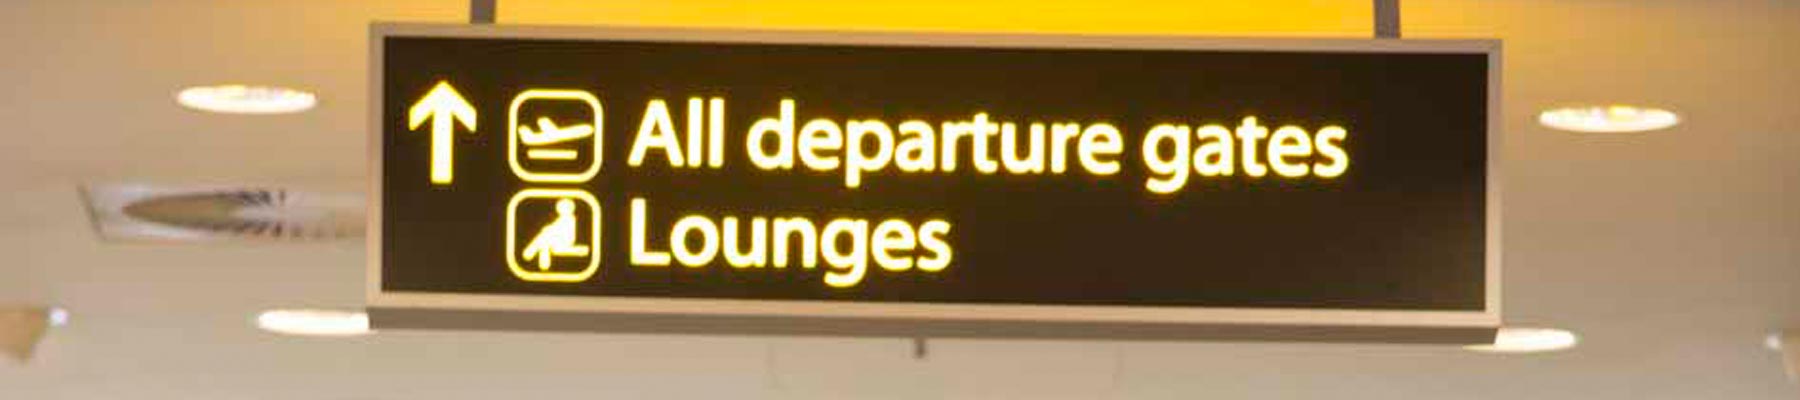 Departure gates sign